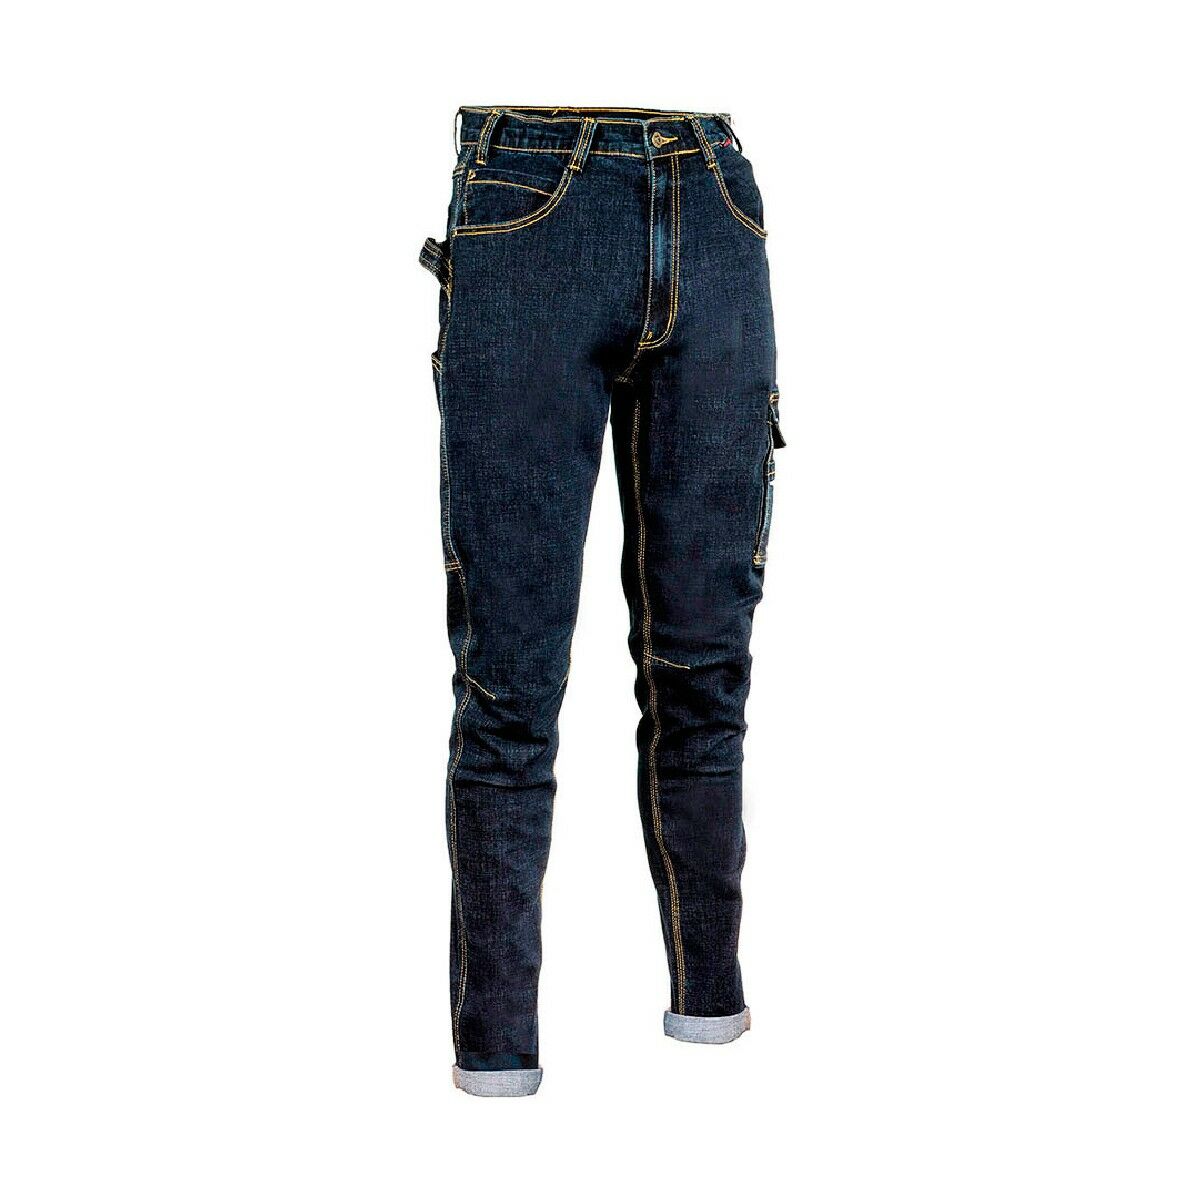 Pantaloni de siguranță Cofra Cabries Profesionist Bleumarin - Mărime 46